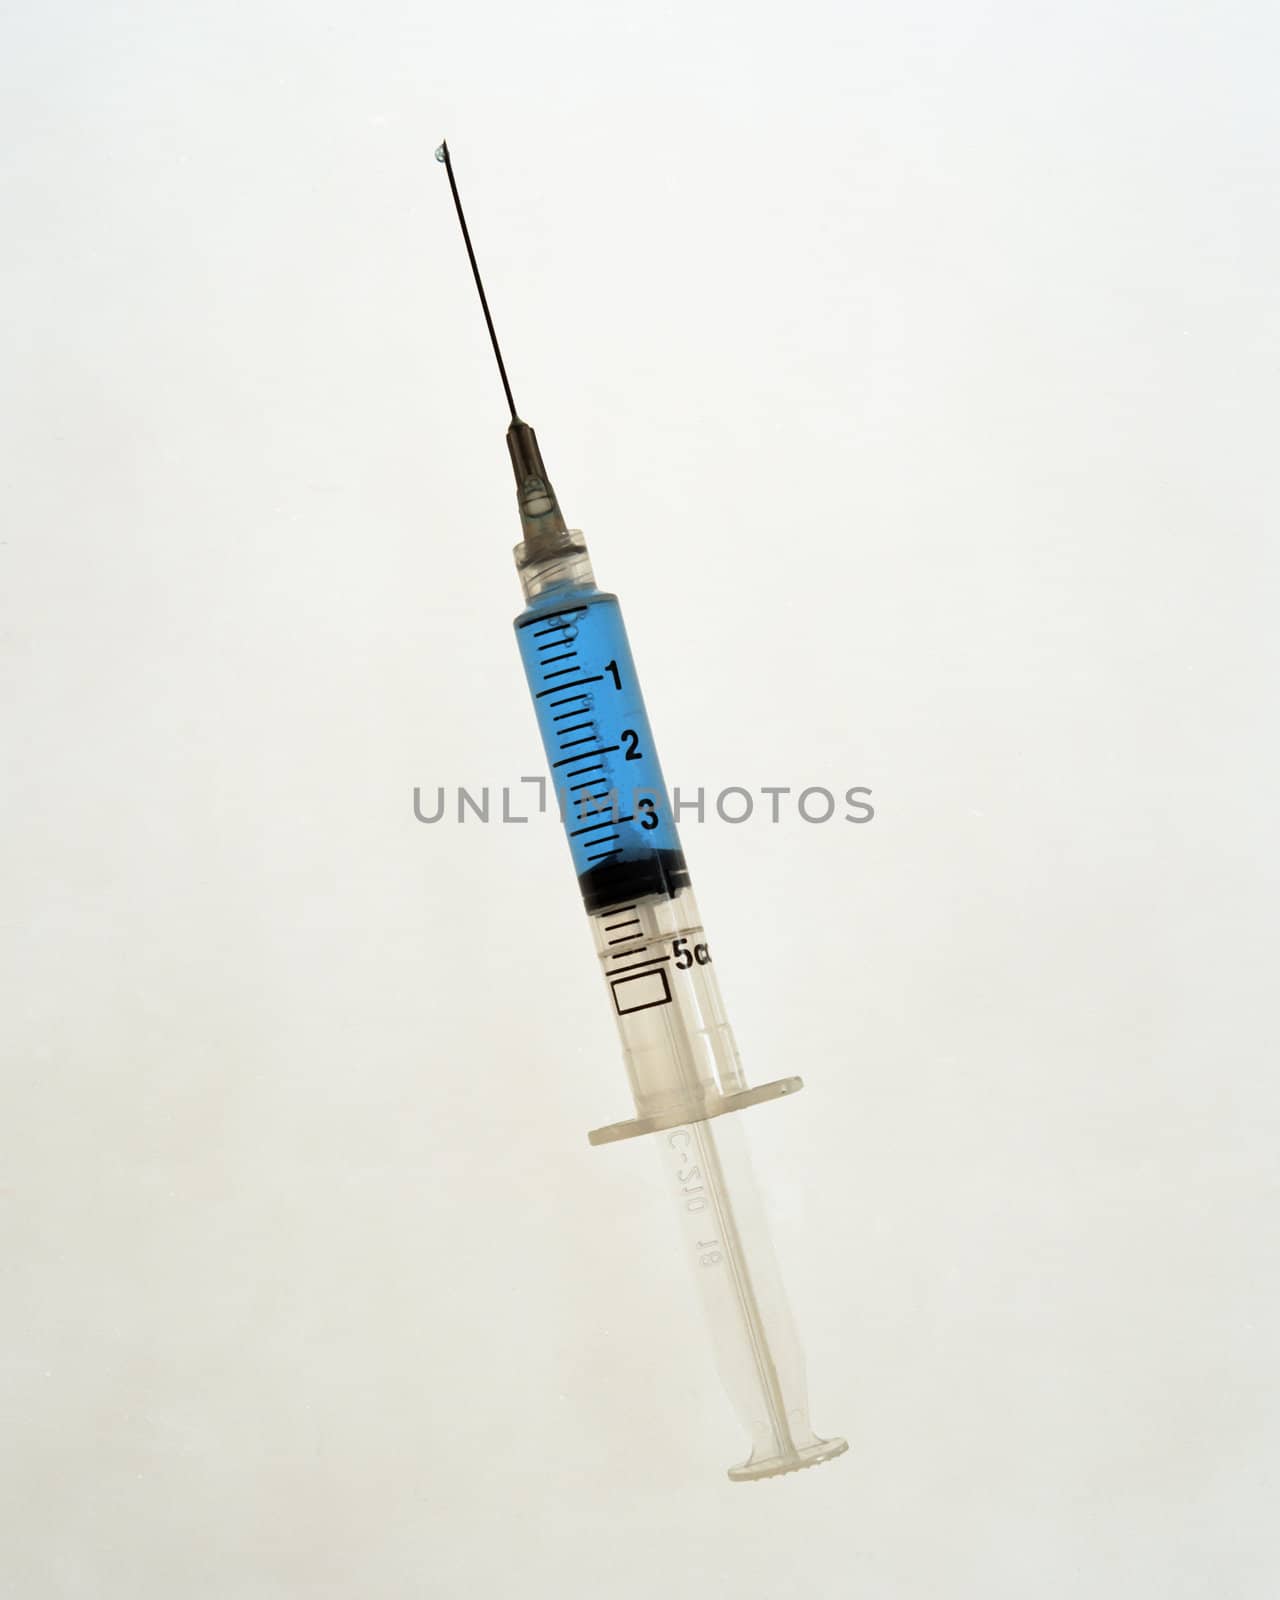 Syringe  by DirkWestphal